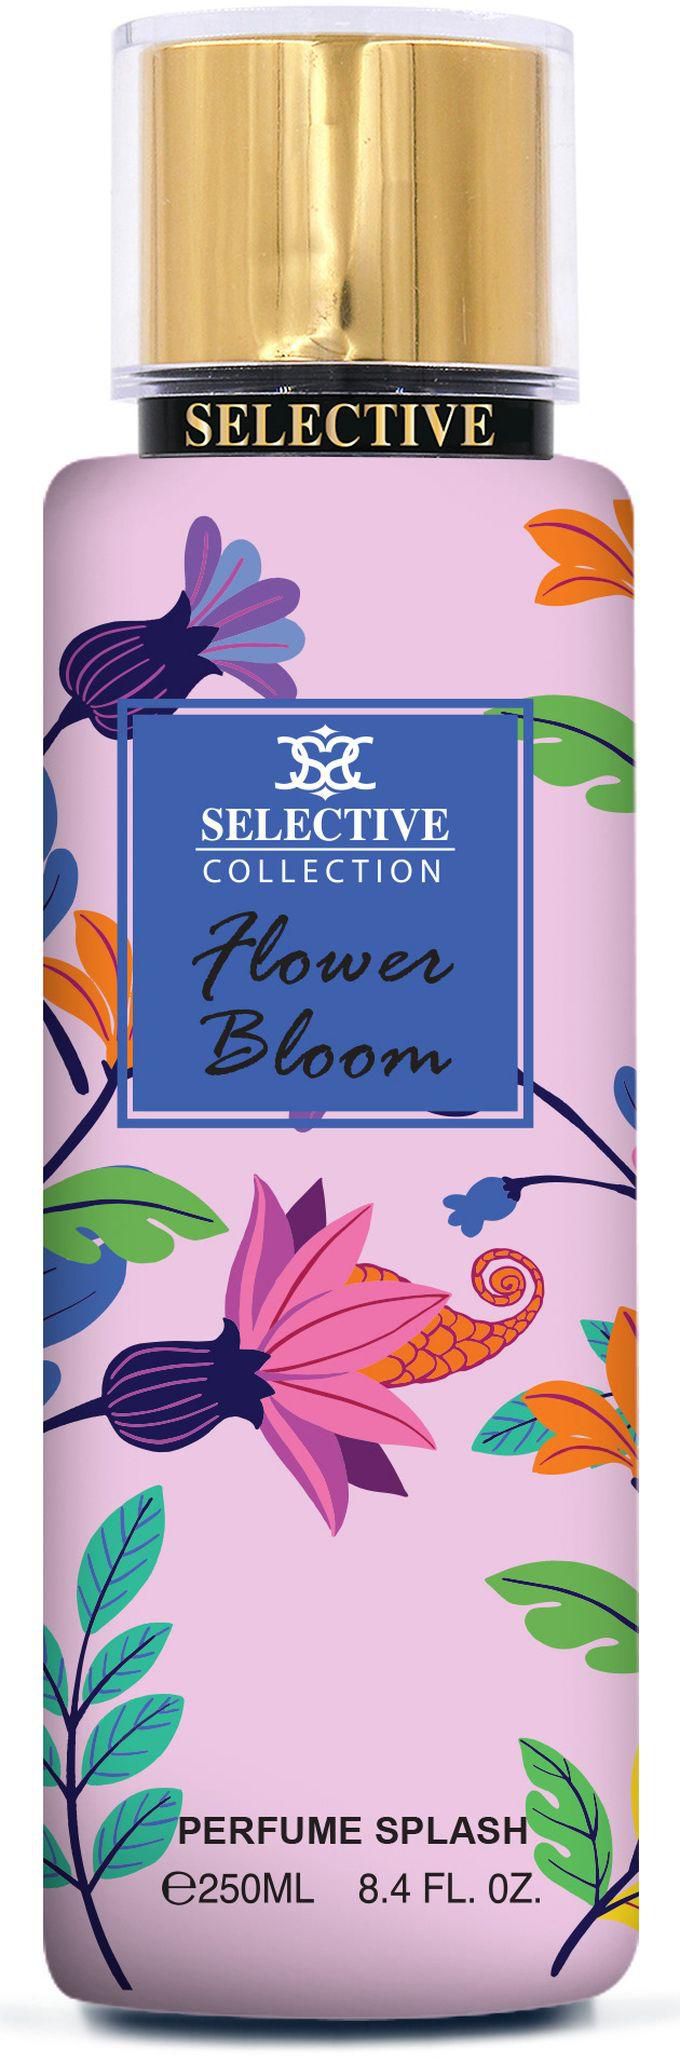 Selective Collection سبلاش للجسم من سيليكتيف فلور بلوووم ، 250 مل